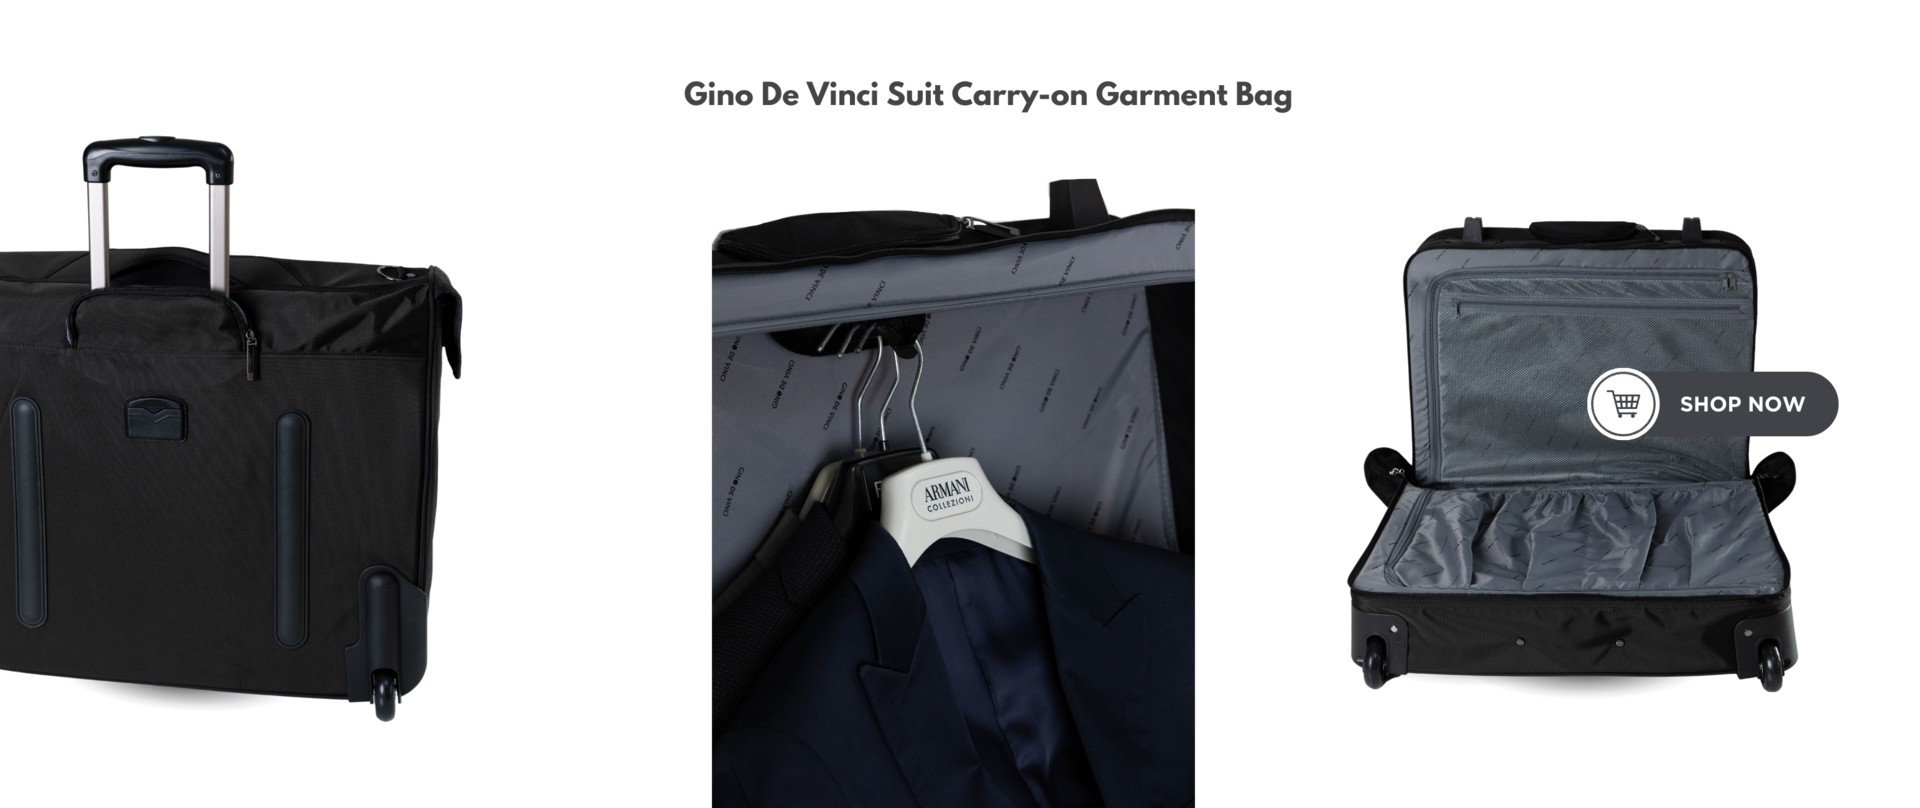 Gino De Vinci Products